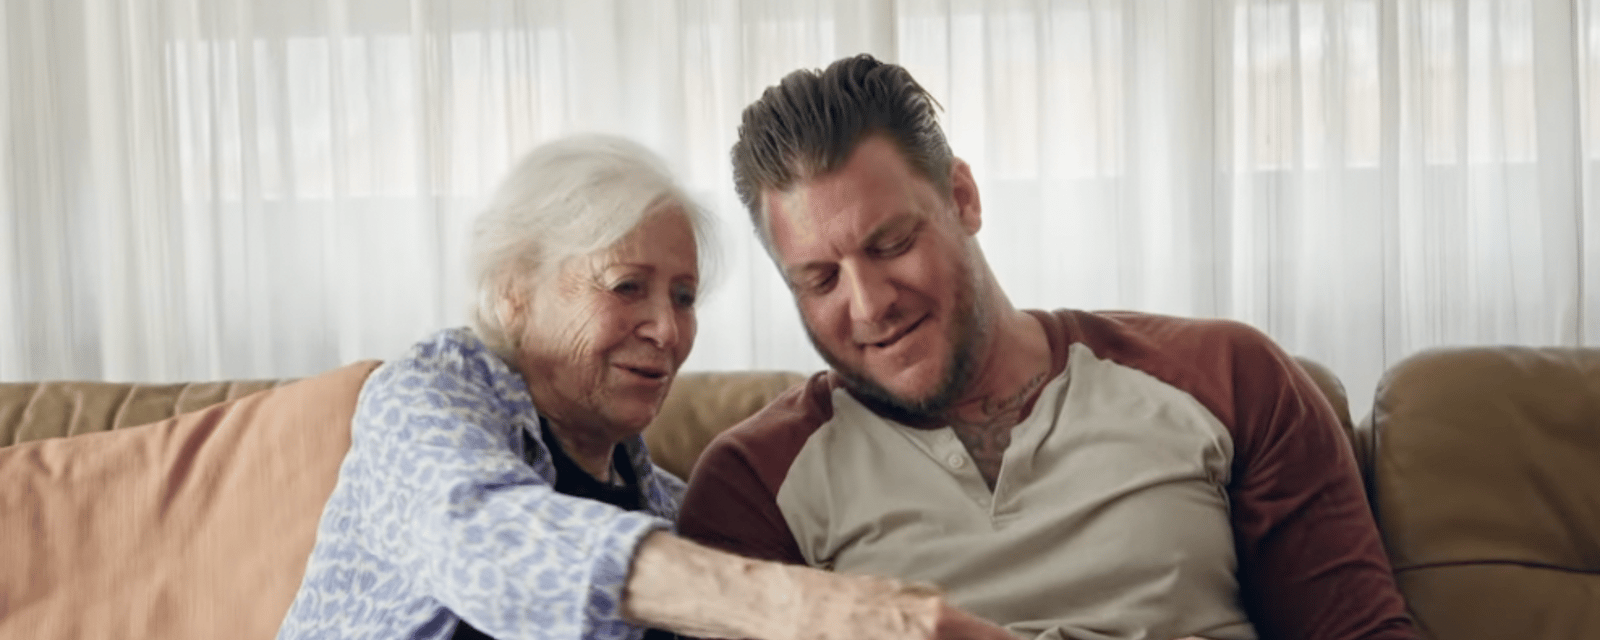 Mathieu Baron vit un moment touchant avec sa grand-mère 